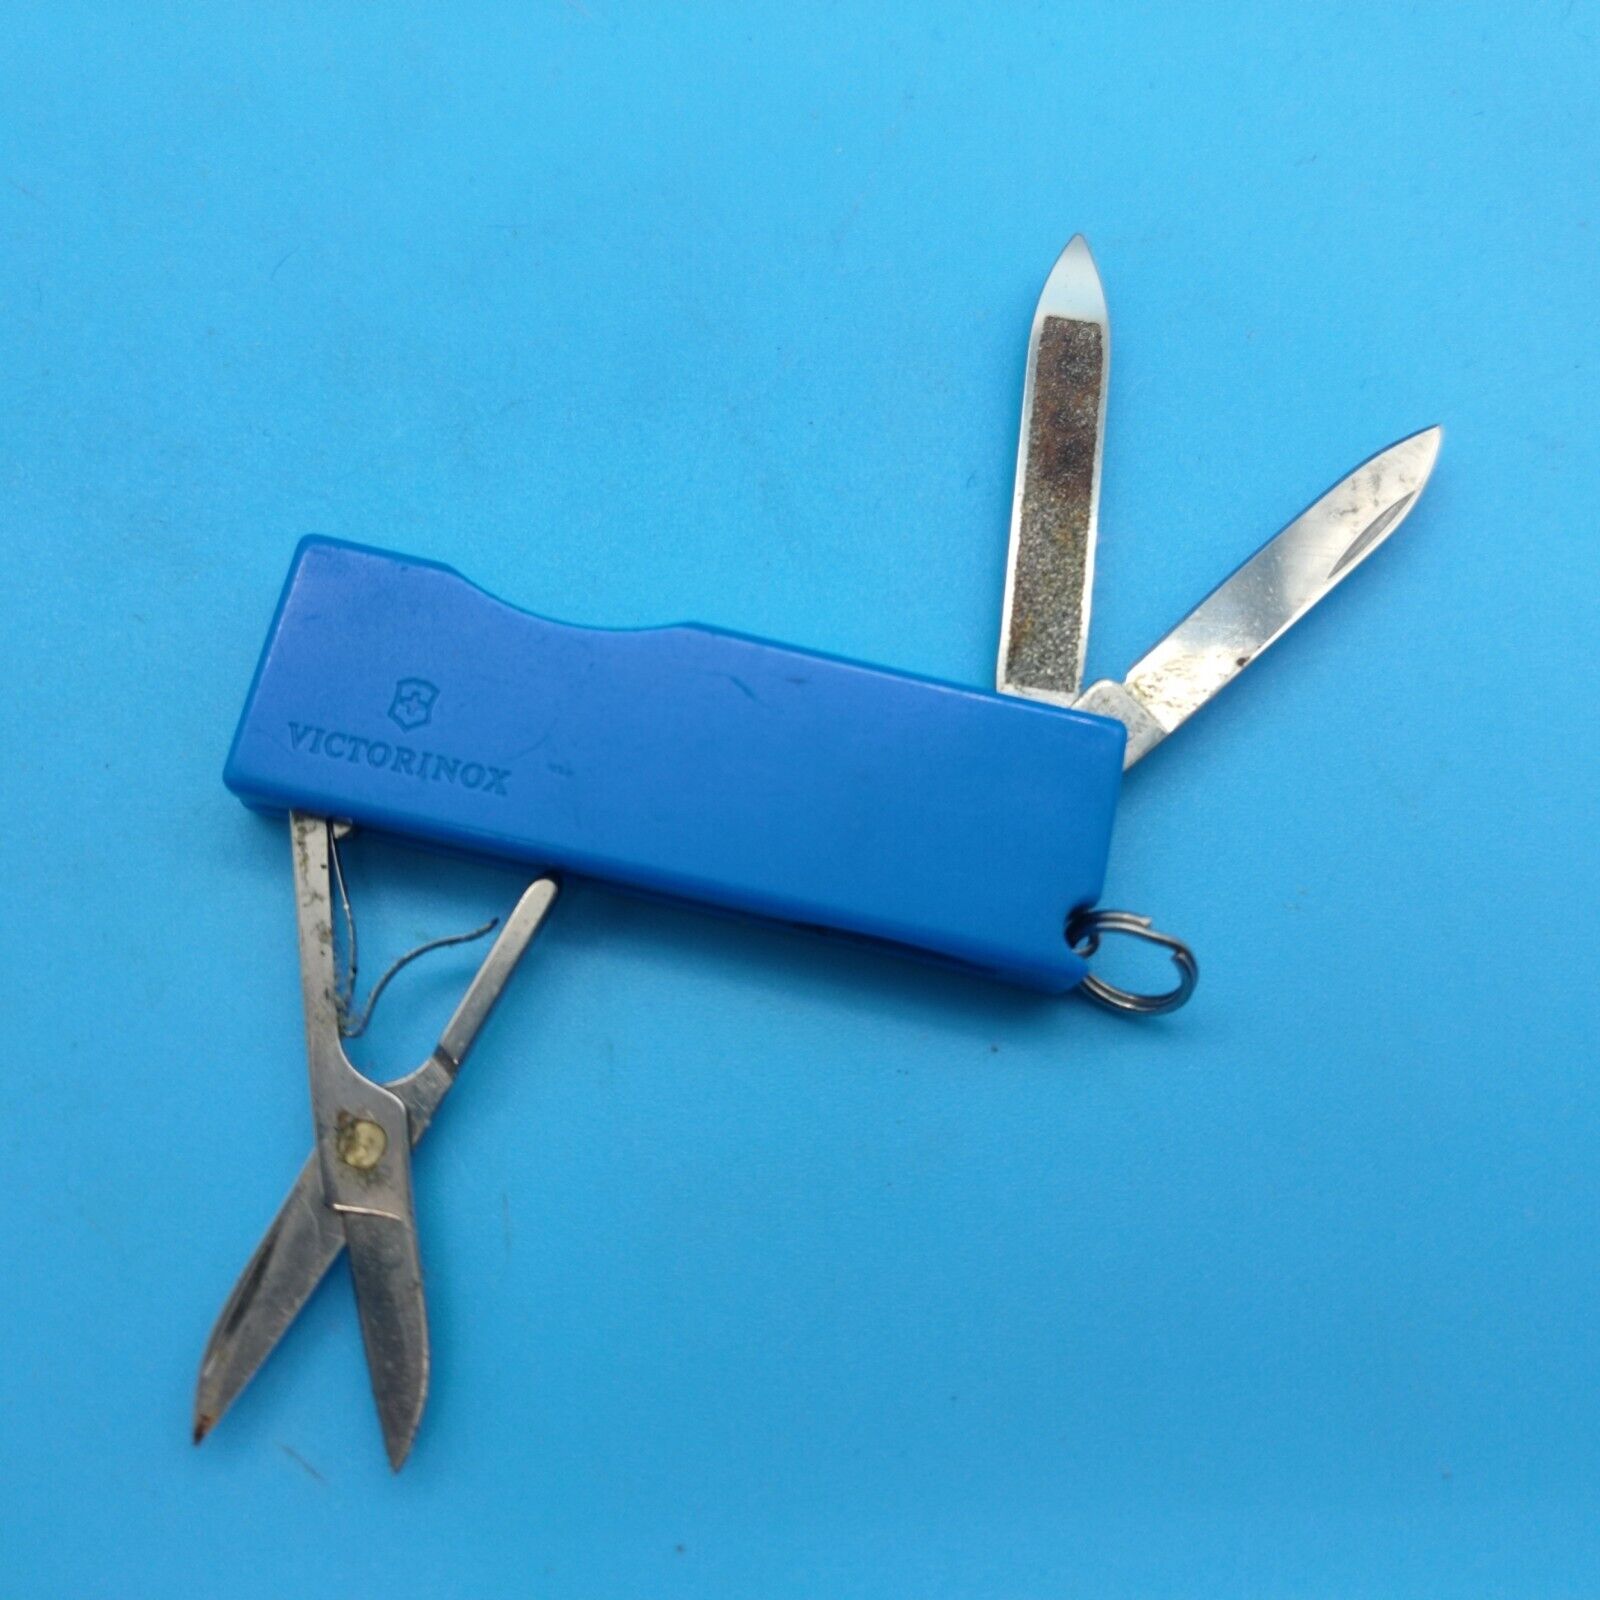 VICTORINOX Tomo Capri Blue Swiss Army Folding Knife Rare Discontinued Color